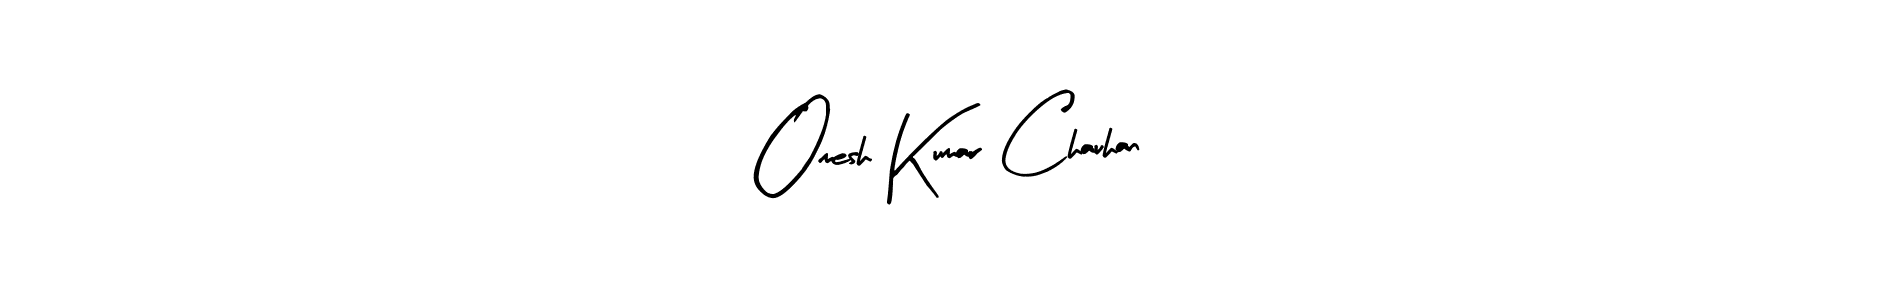 How to Draw Omesh Kumar Chauhan signature style? Arty Signature is a latest design signature styles for name Omesh Kumar Chauhan. Omesh Kumar Chauhan signature style 8 images and pictures png